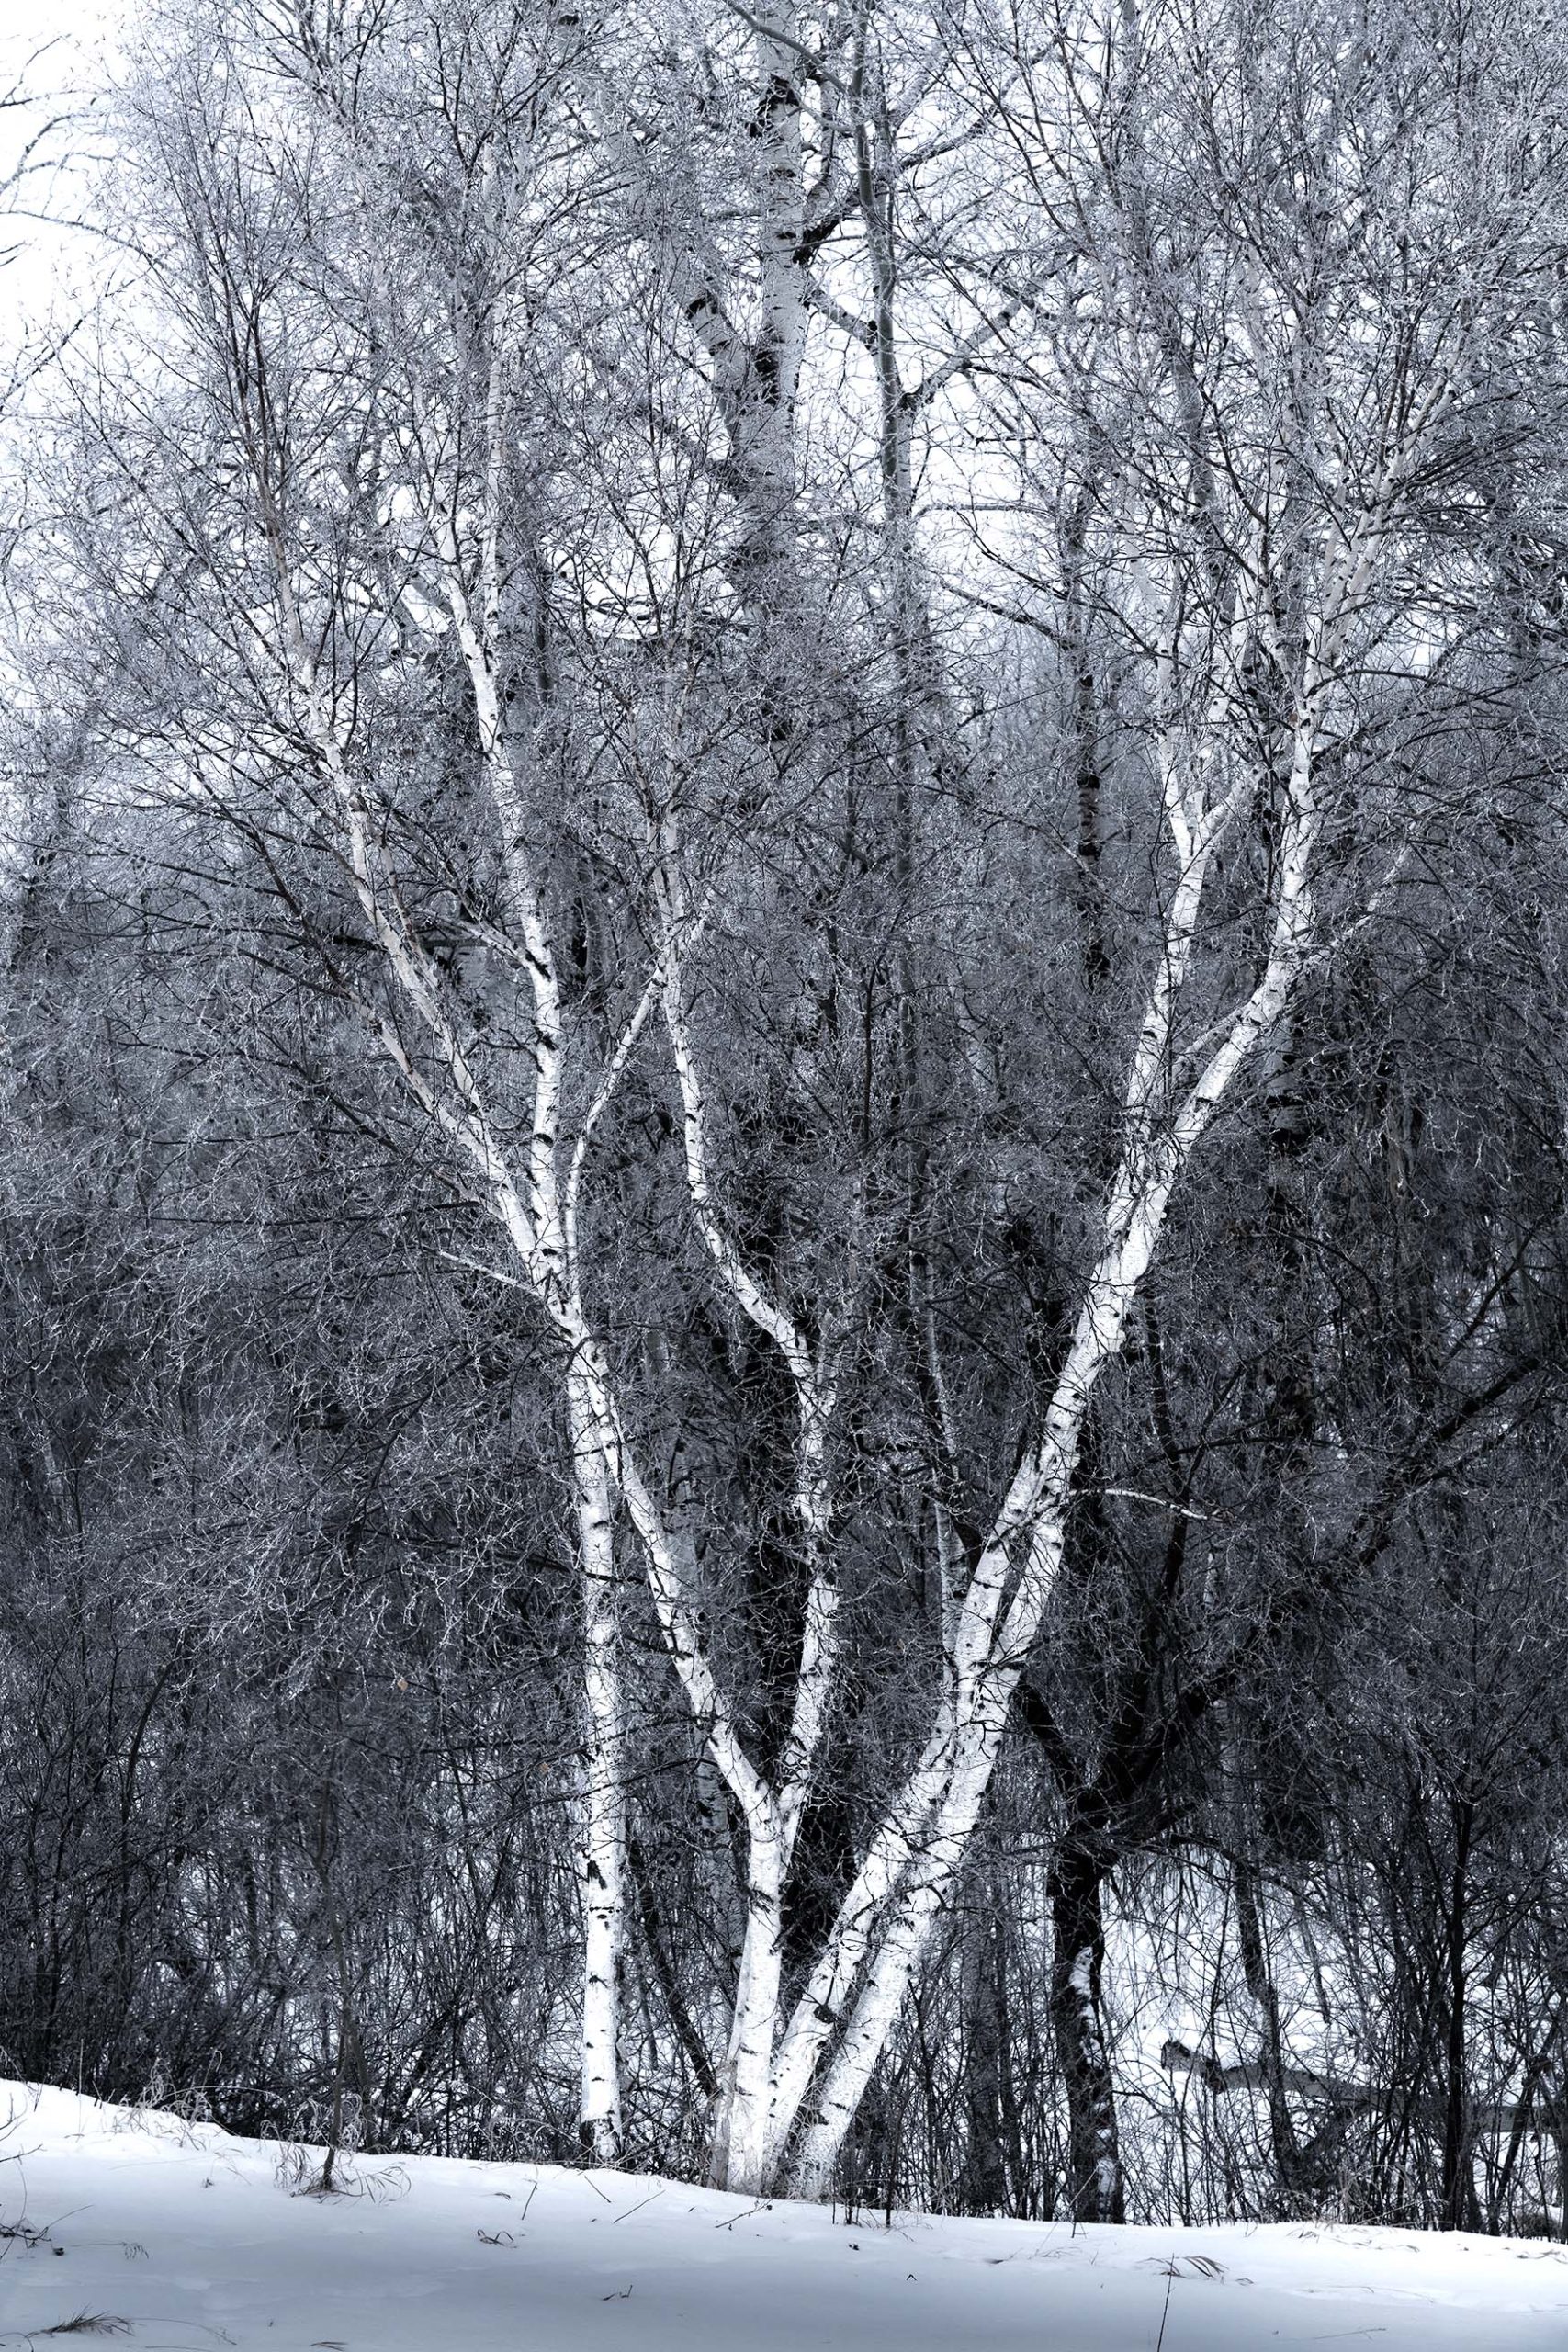 White Paper Birch in winter snow